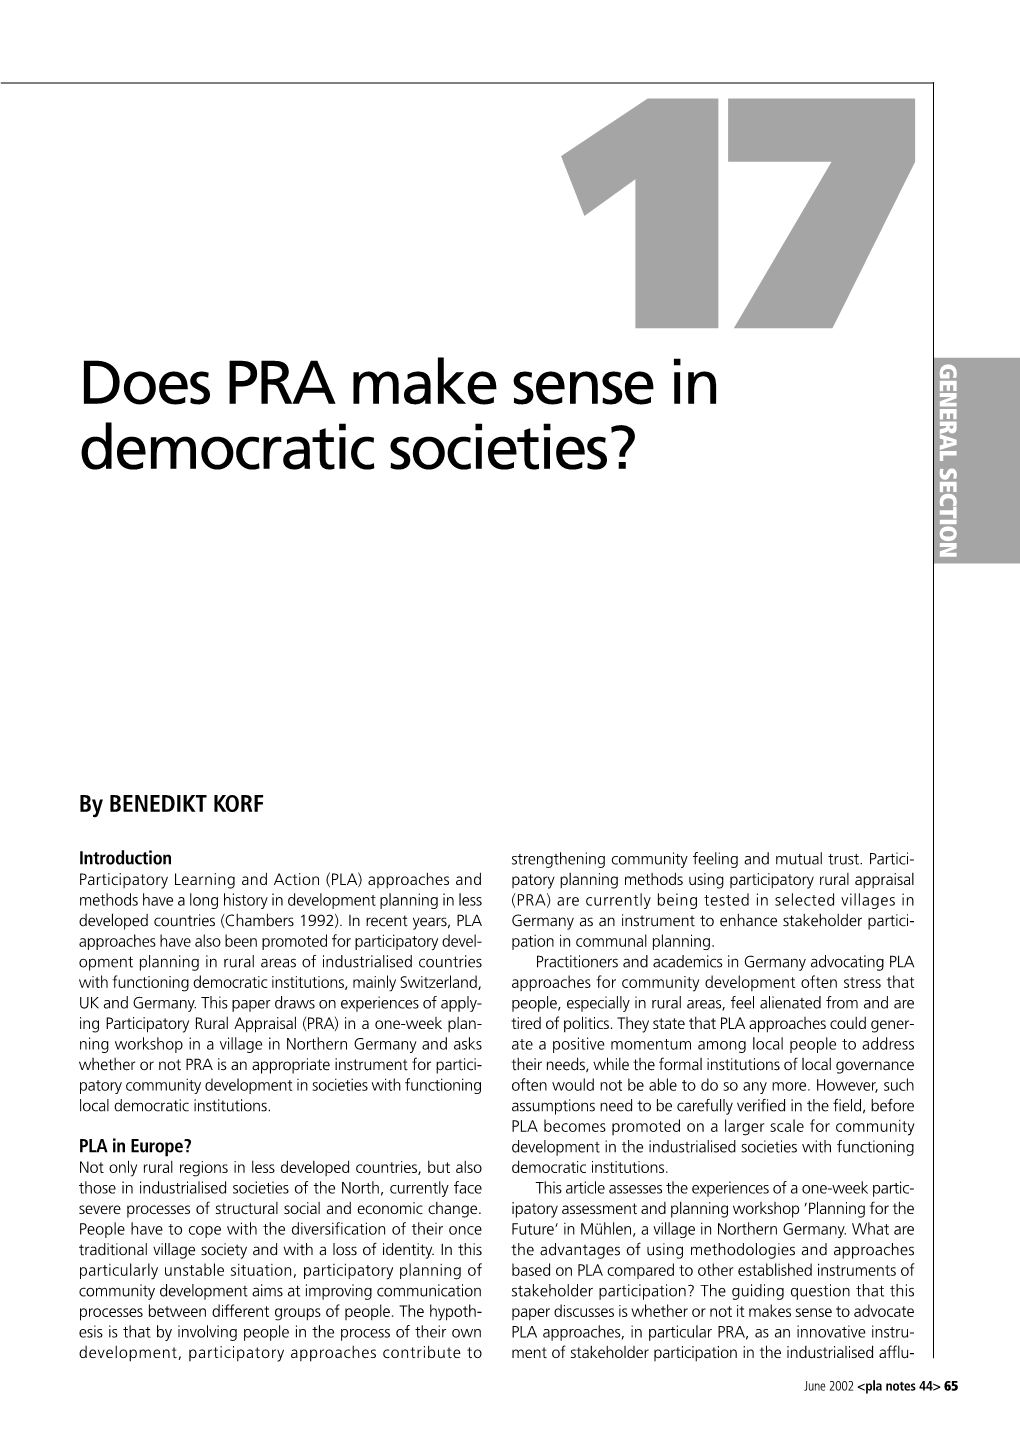 Does PRA Make Sense in Democratic Societies?